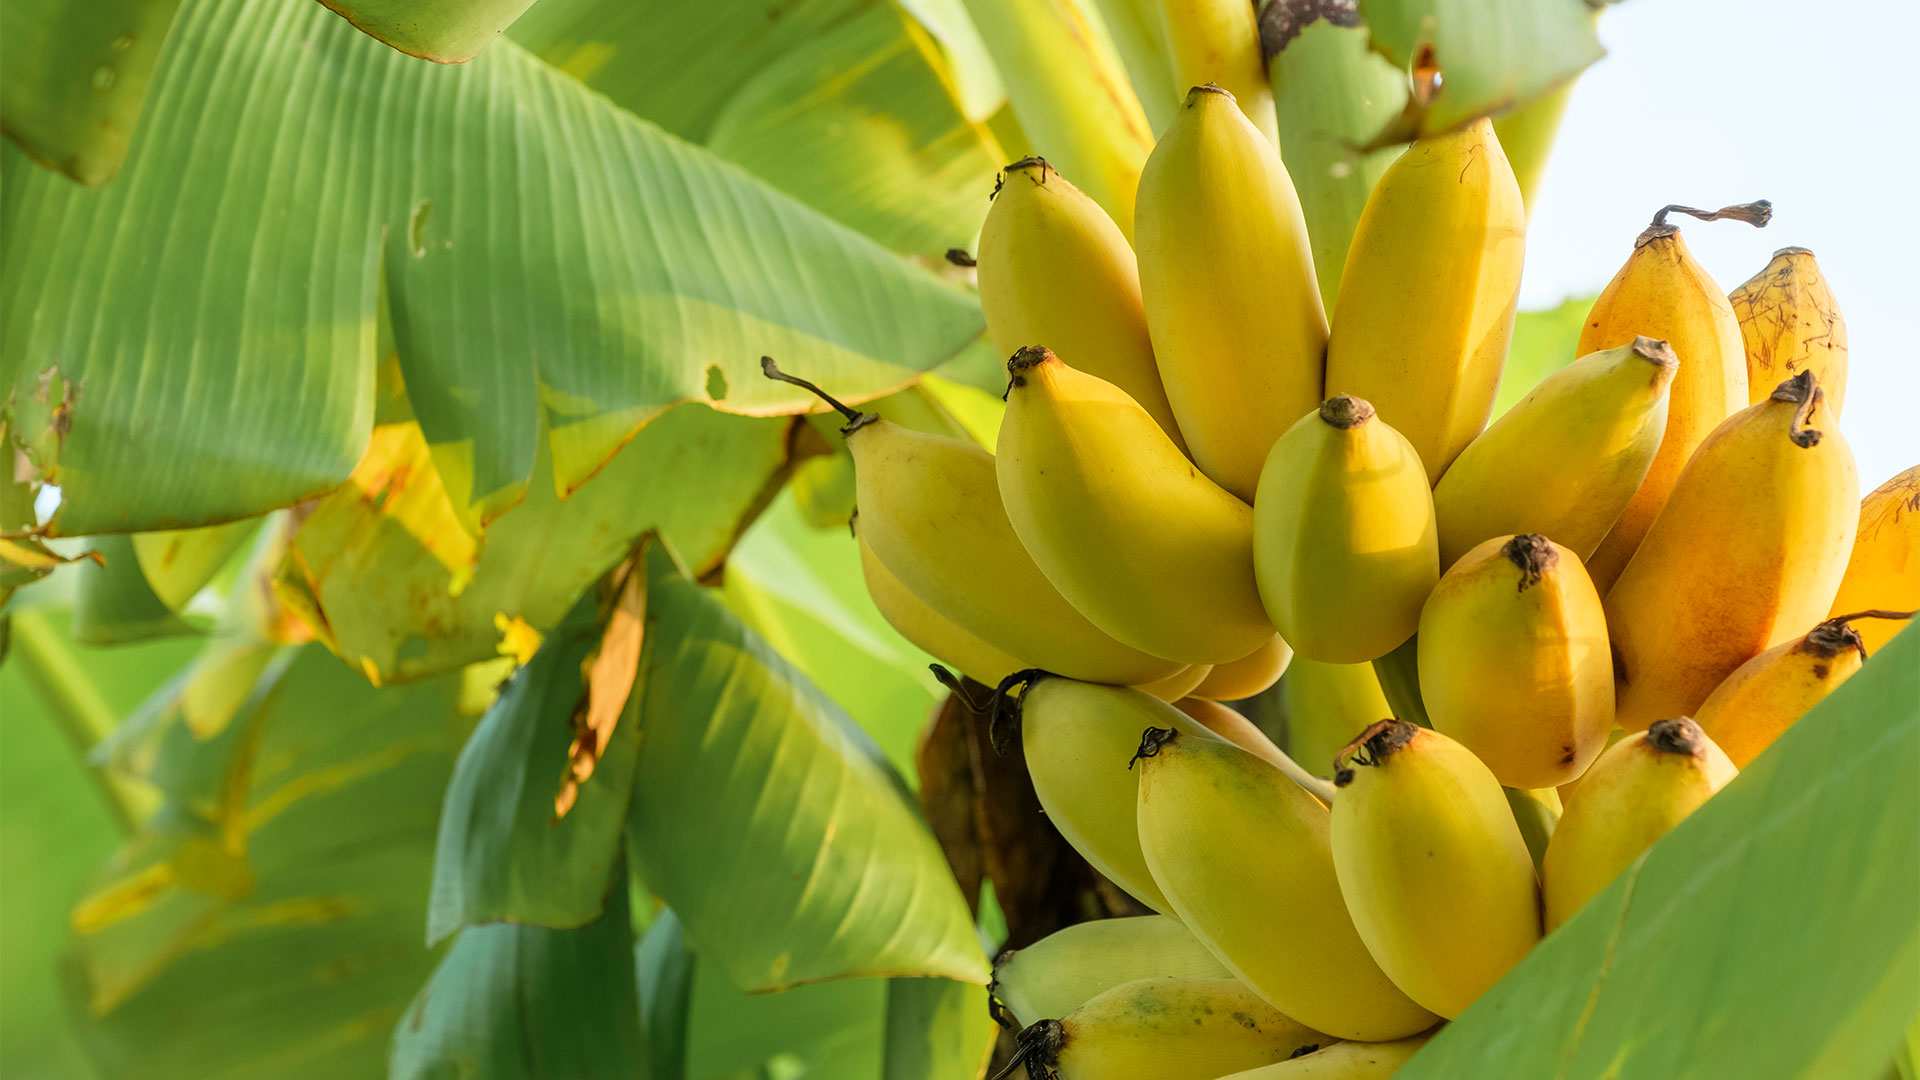 Bunch of ripe gold bananas on tree